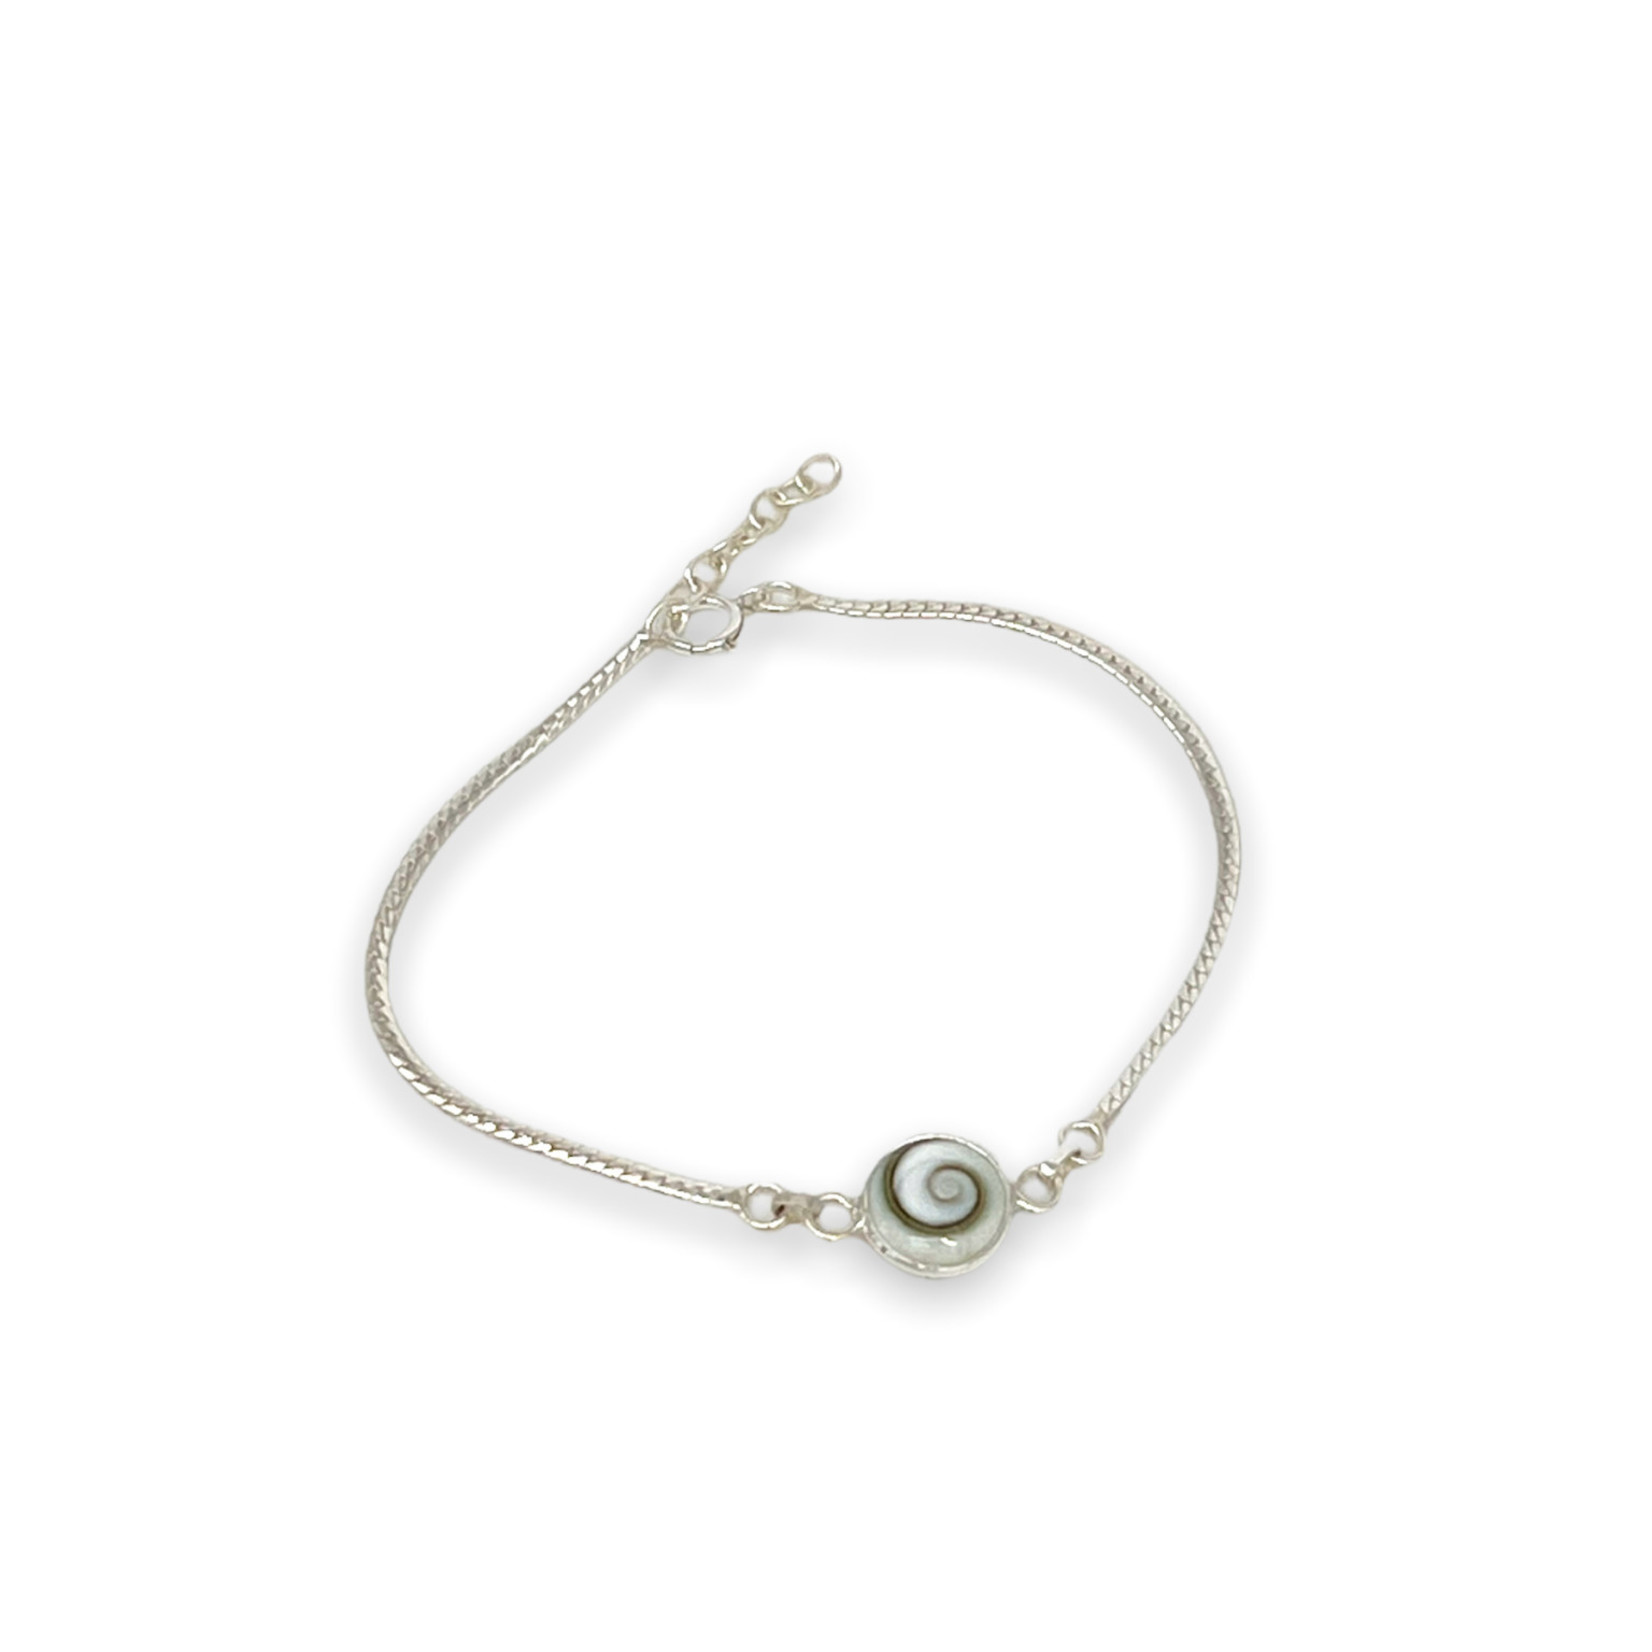 Single Eye of Shiva Shell Adjustable Length Sterling Silver Bracelet